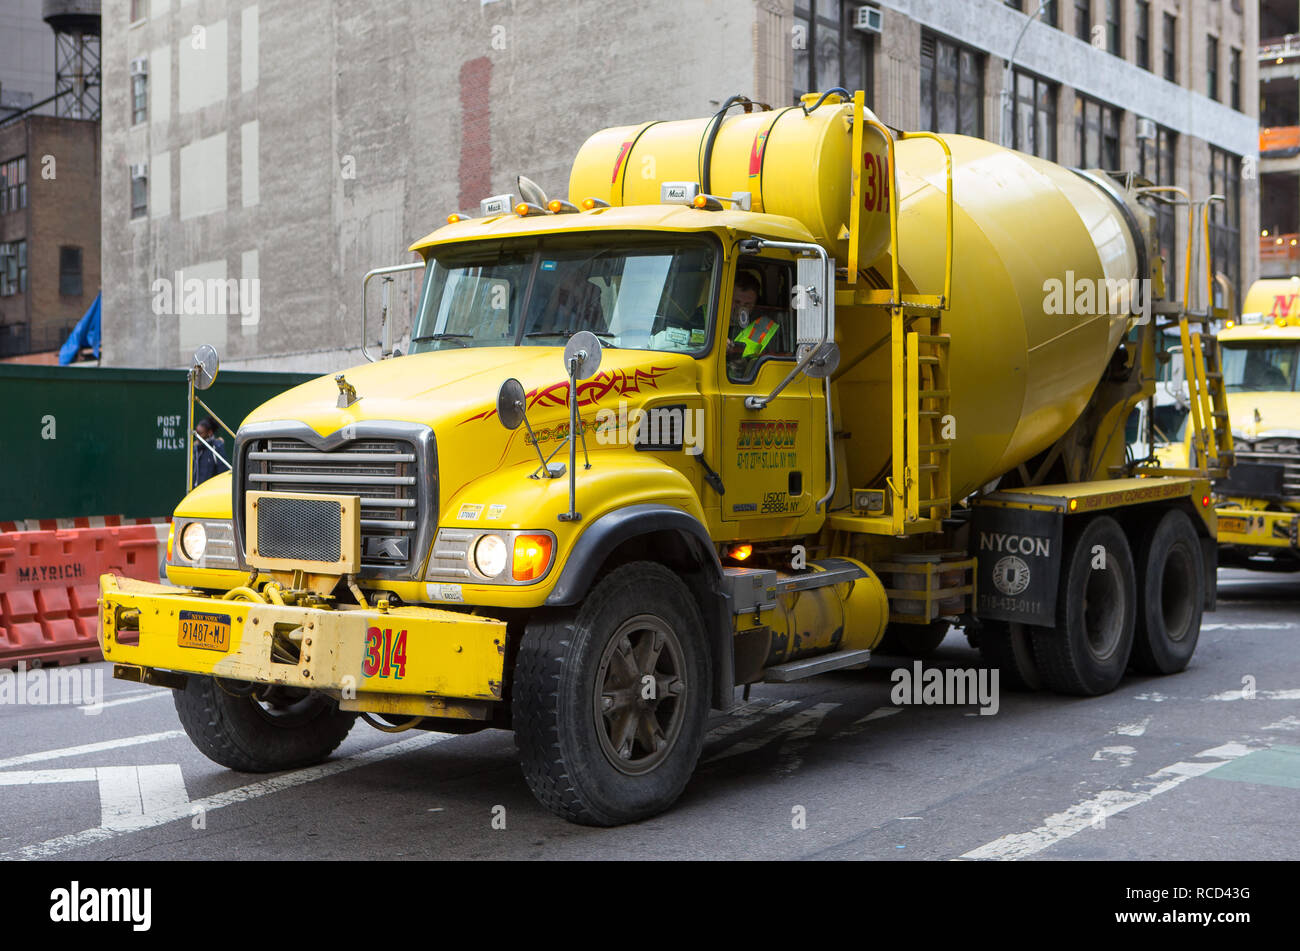 Eine NYCON (Nycon New York konkrete Versorgung) Mack granite Betonmischer LKW auf der Straße in New York City, NY, USA. Stockfoto